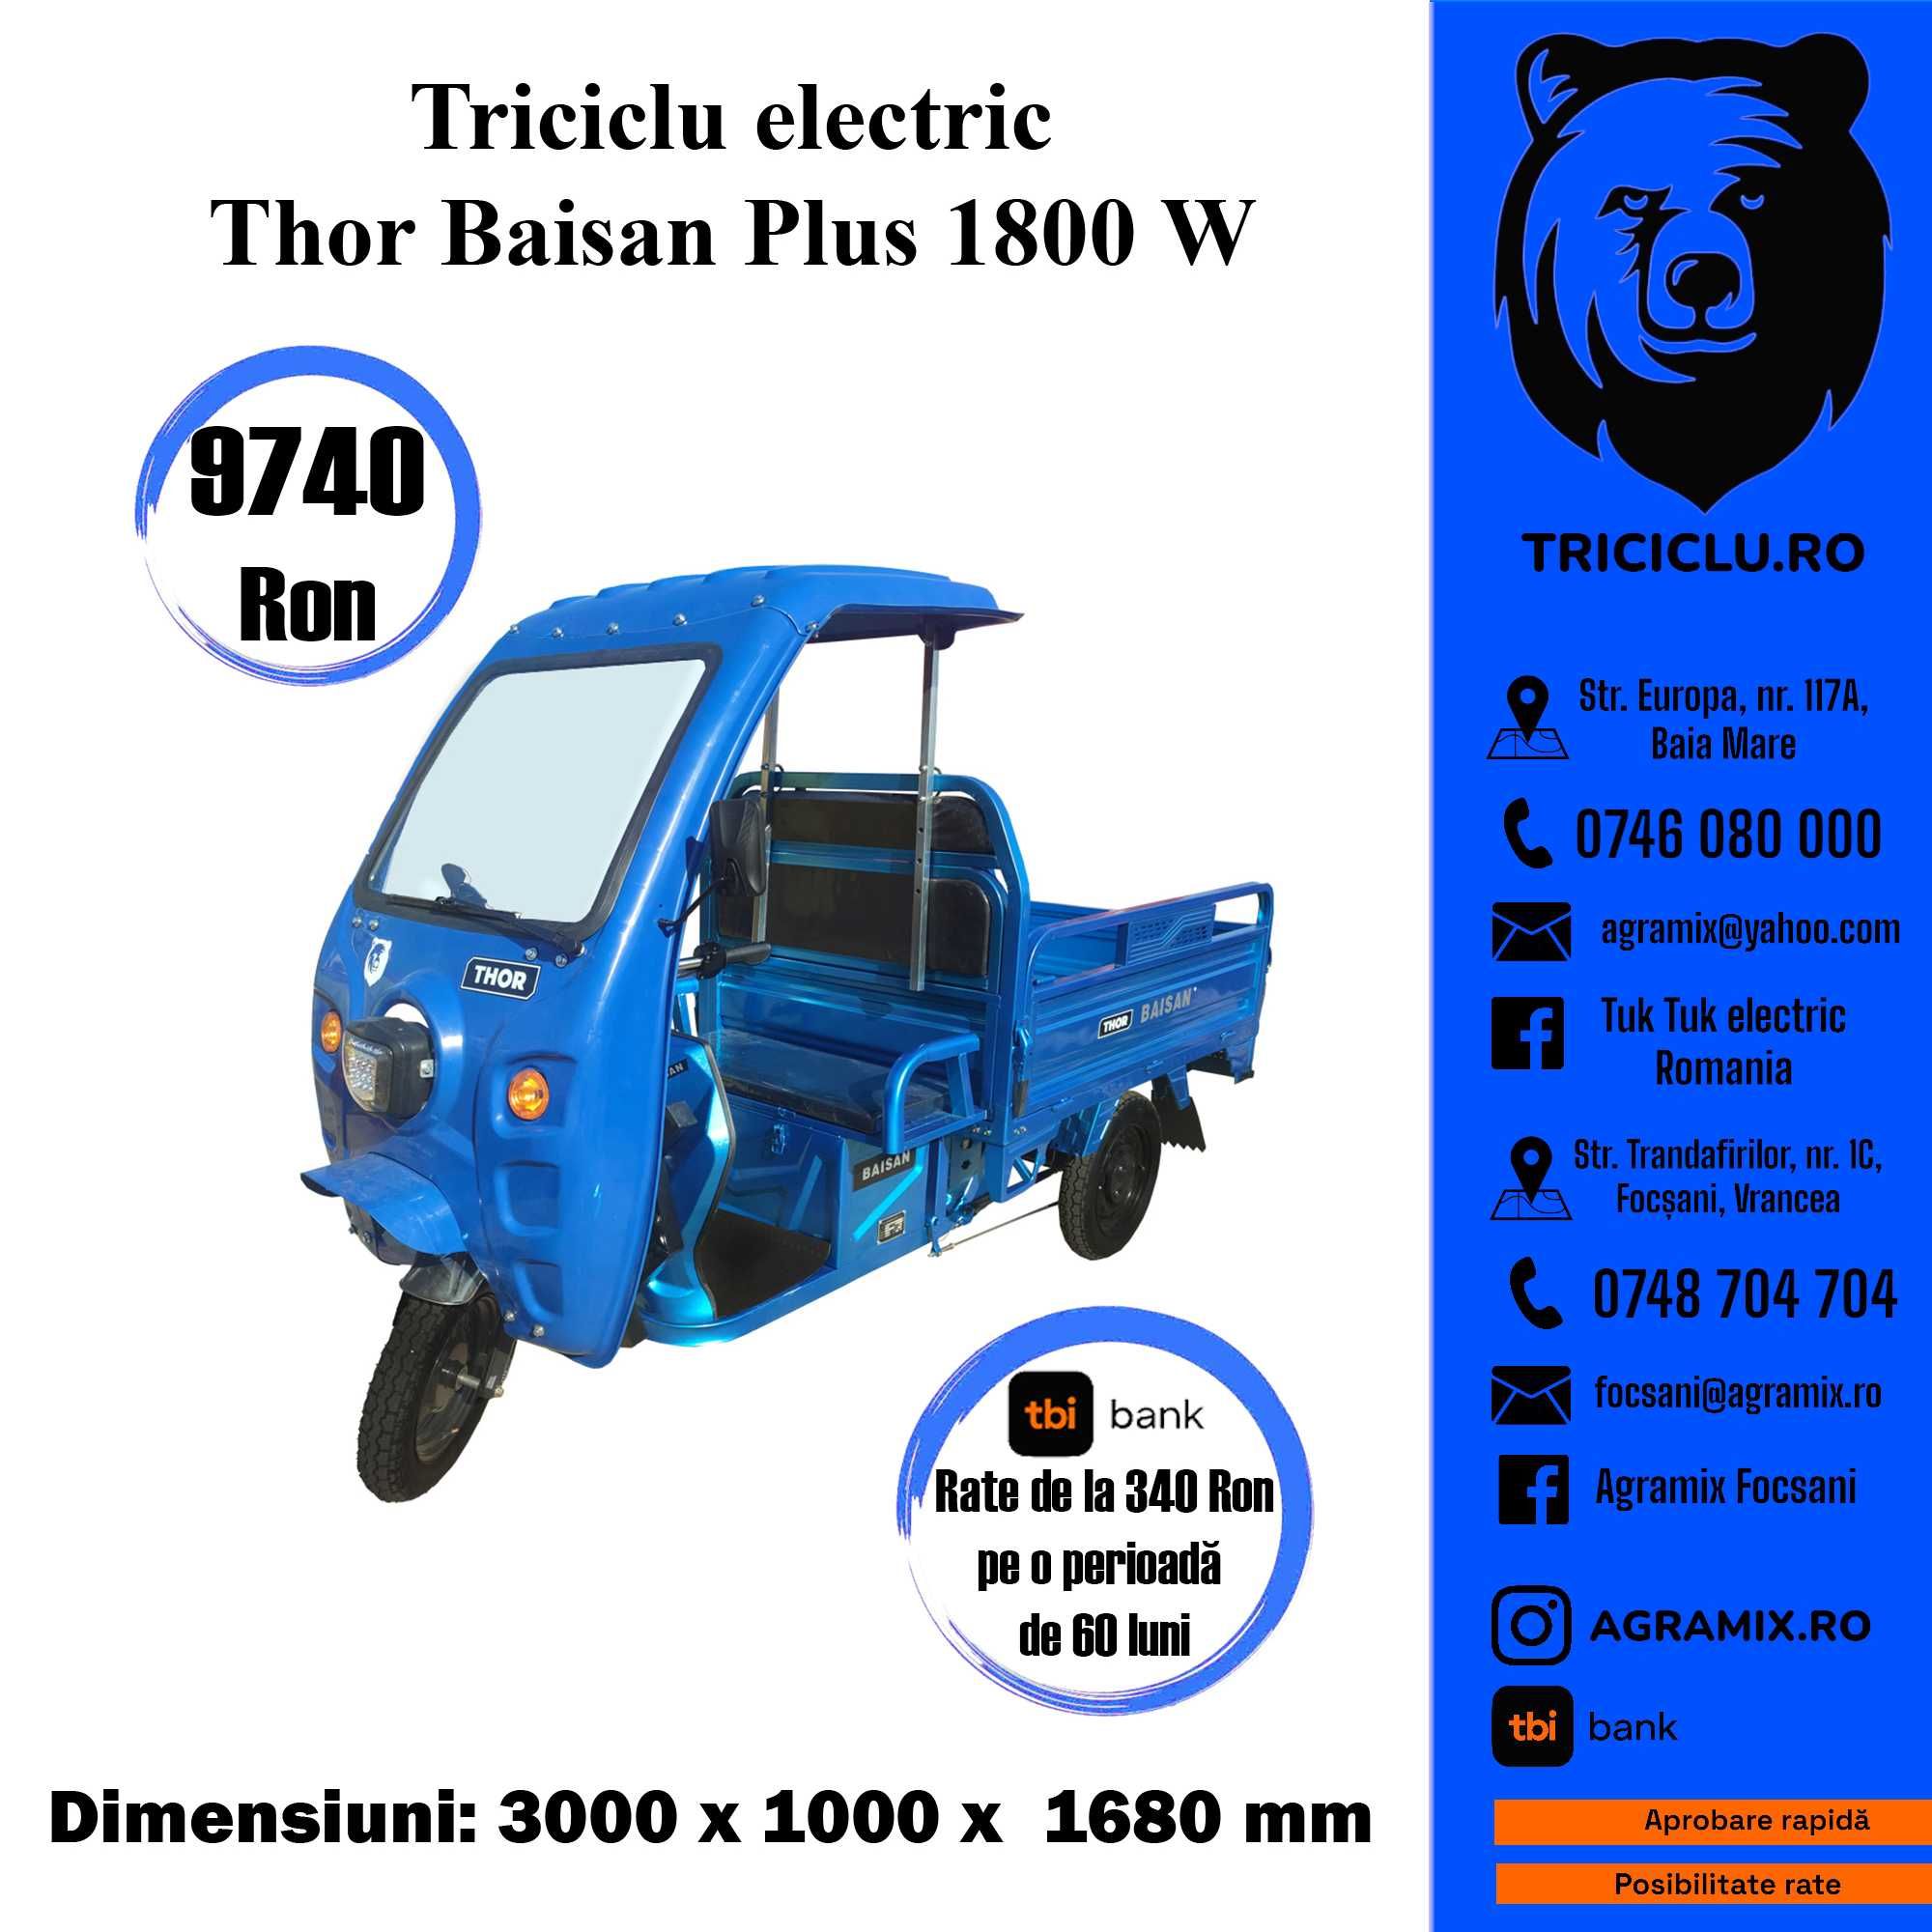 Triciclu electric fara cabina 1800W nou marca THOR BAISAN Agramix